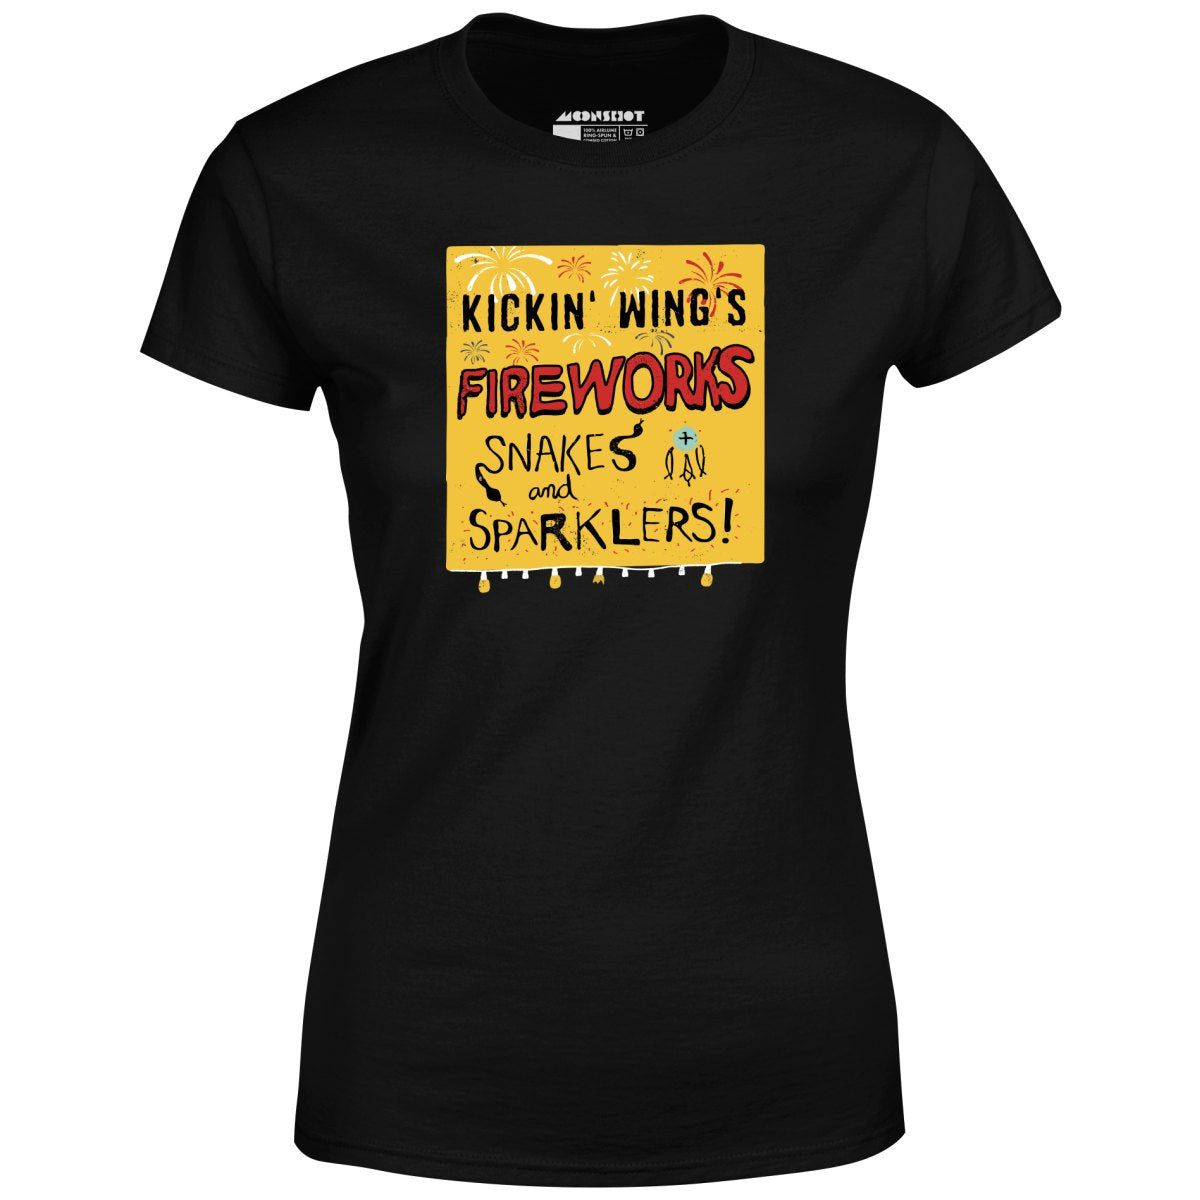 Kickin' Wing's Fireworks Snakes & Sparklers - Women's T-Shirt